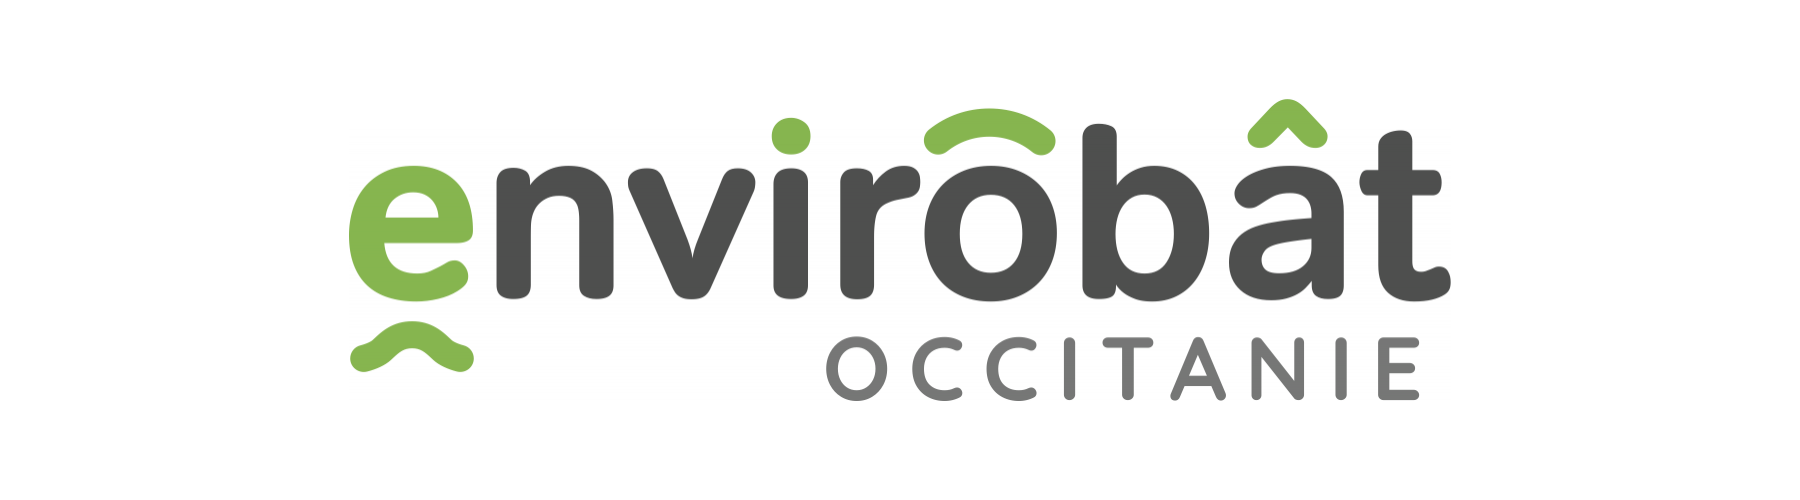 logo-envirobat-occitanie-2019